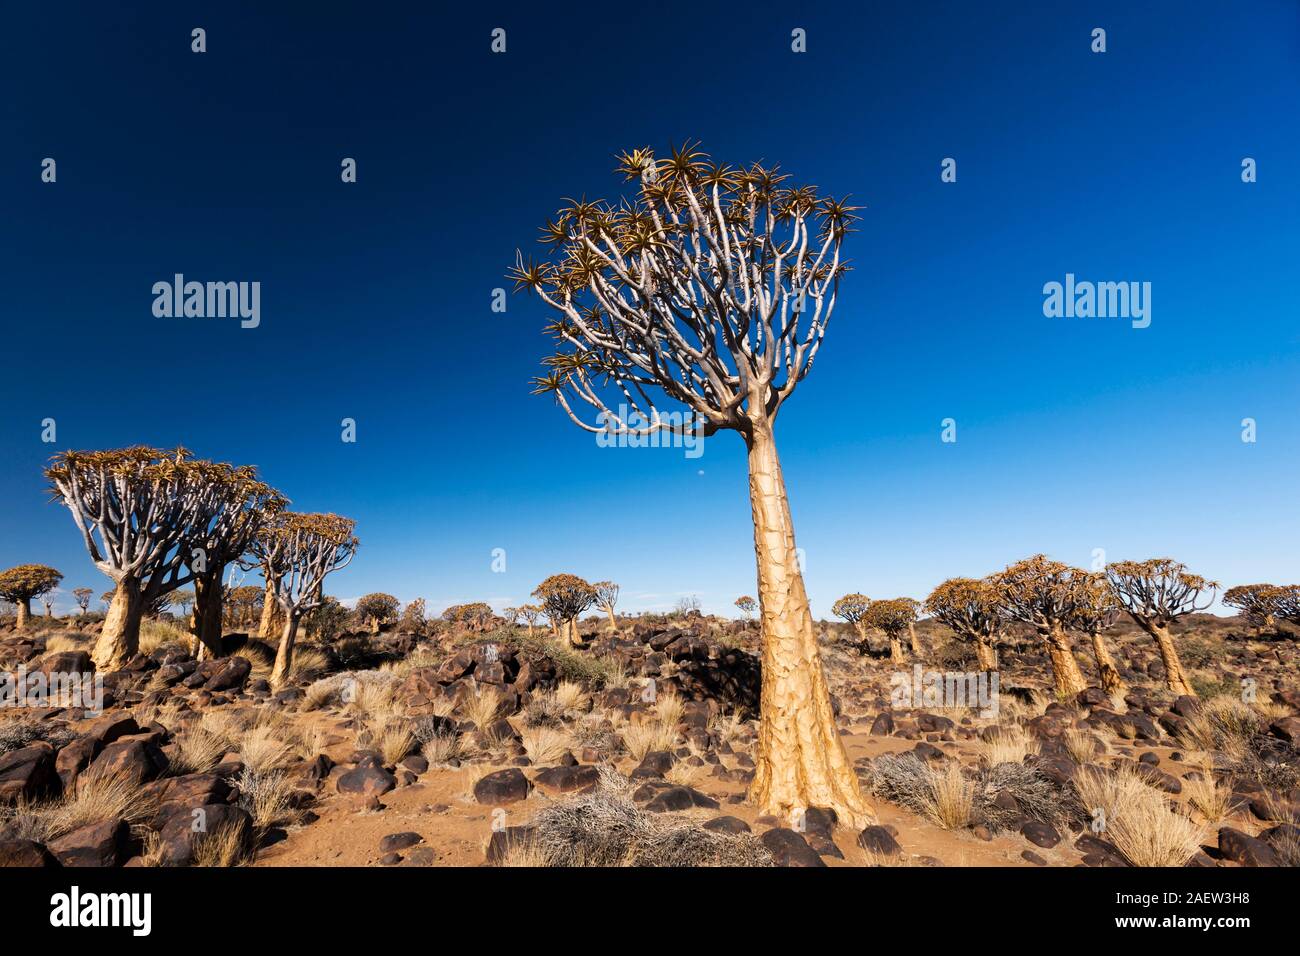 Foresta di alberi di Quiver, dicotoma di aloe, pianta succulenta gigante, mattina presto, Keetmanshoop, Regione di Karas, Namibia, Africa Meridionale, Africa Foto Stock